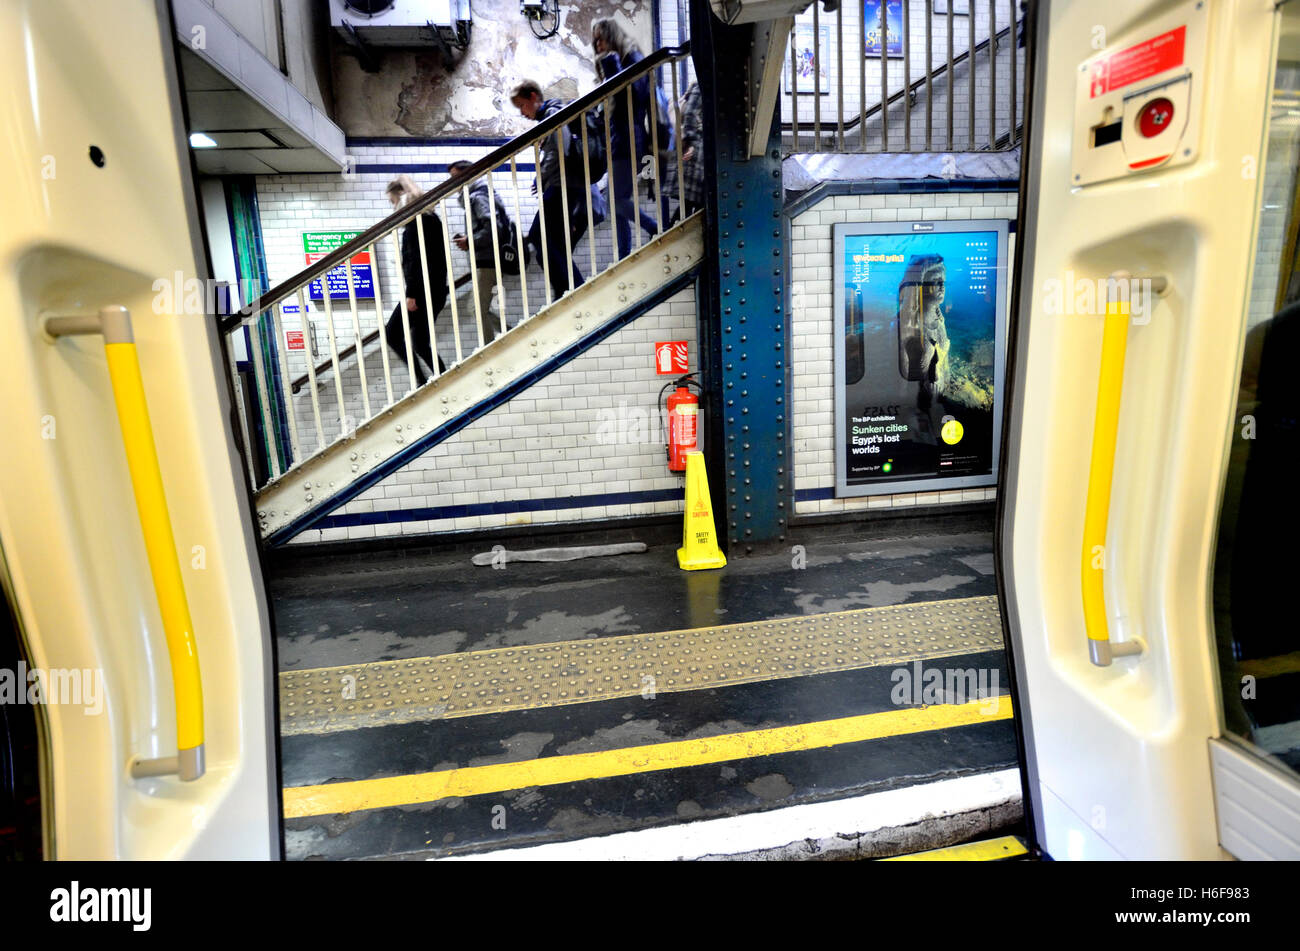 London, England, UK. London underground tube train - doors open on the platform Stock Photo